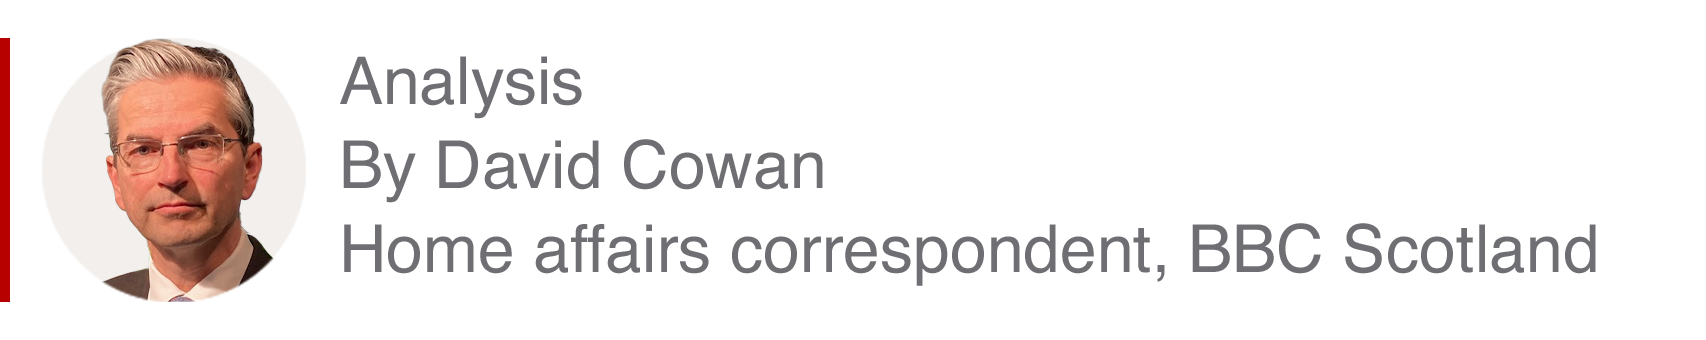 Analysis box by David Cowan, Home affairs correspondent, BBC Scotland